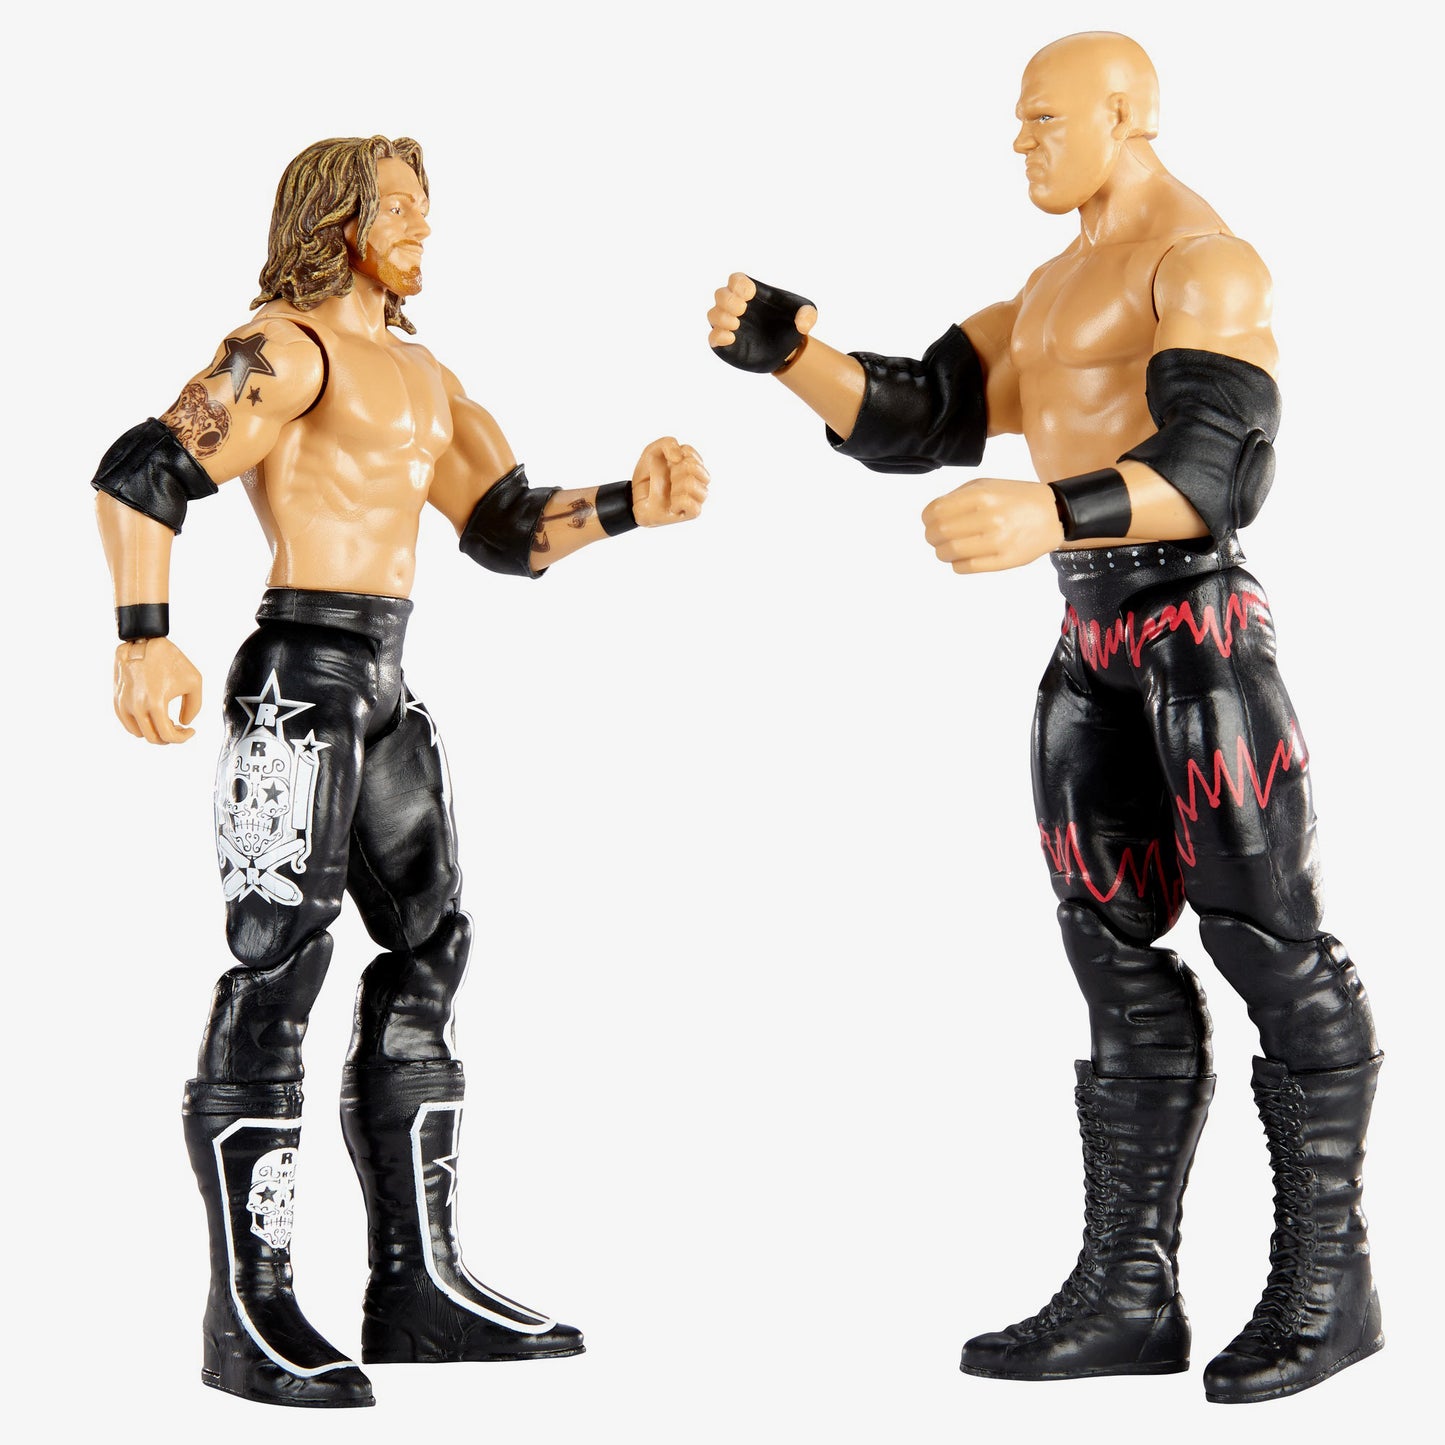 Kane & Edge - WWE Championship Showdown 2-Pack Series #3